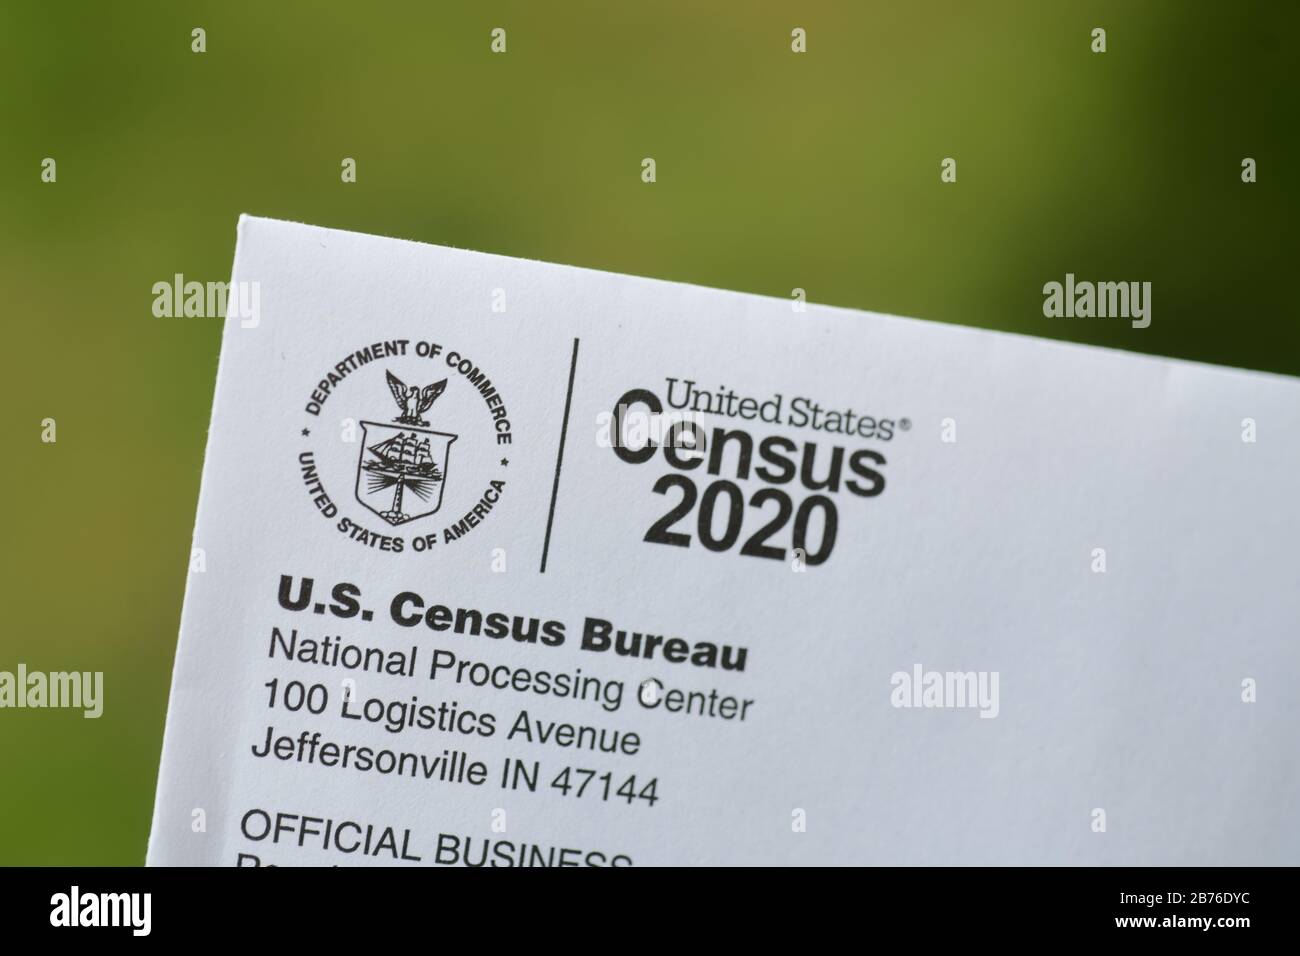 United States Census 2020 mailed notice Stock Photo